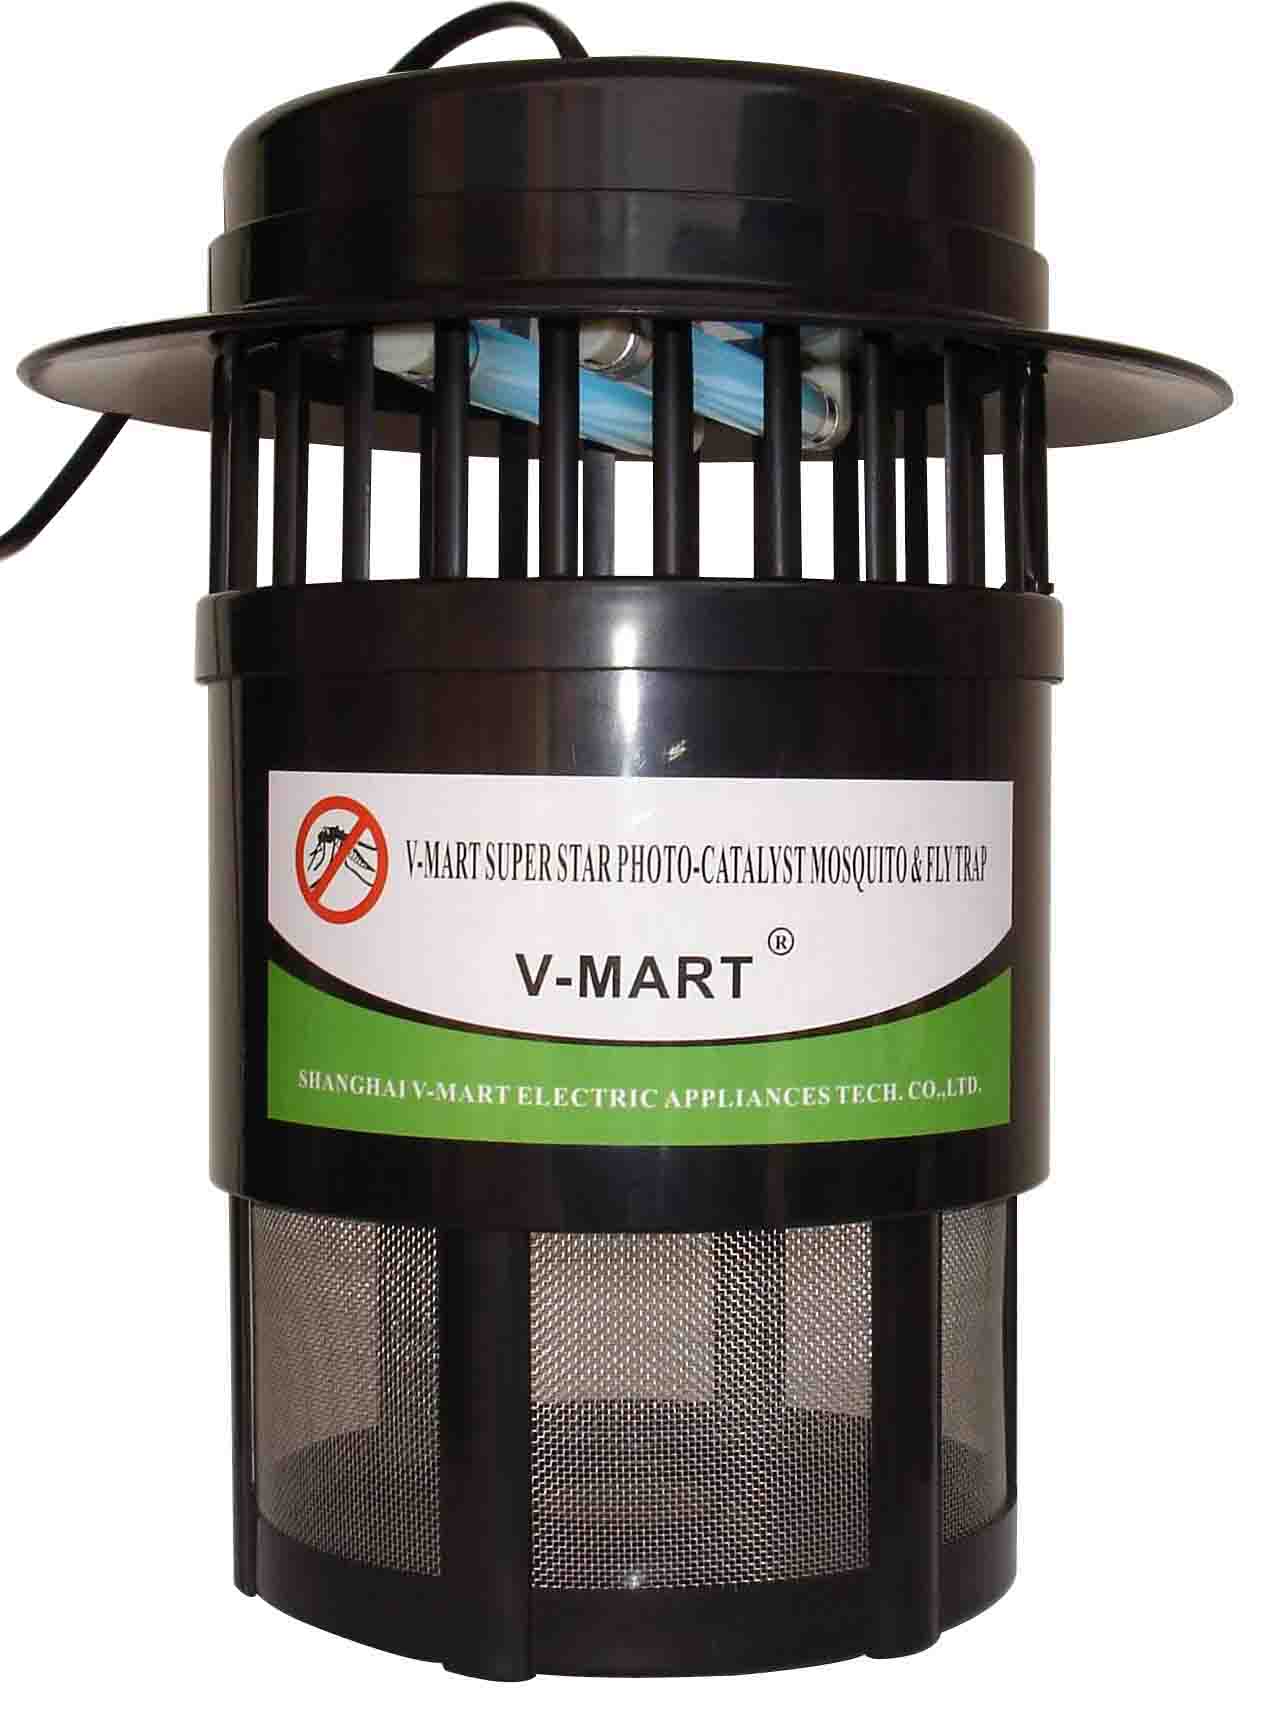 v-mart superstar photocatalyst mosquito trap